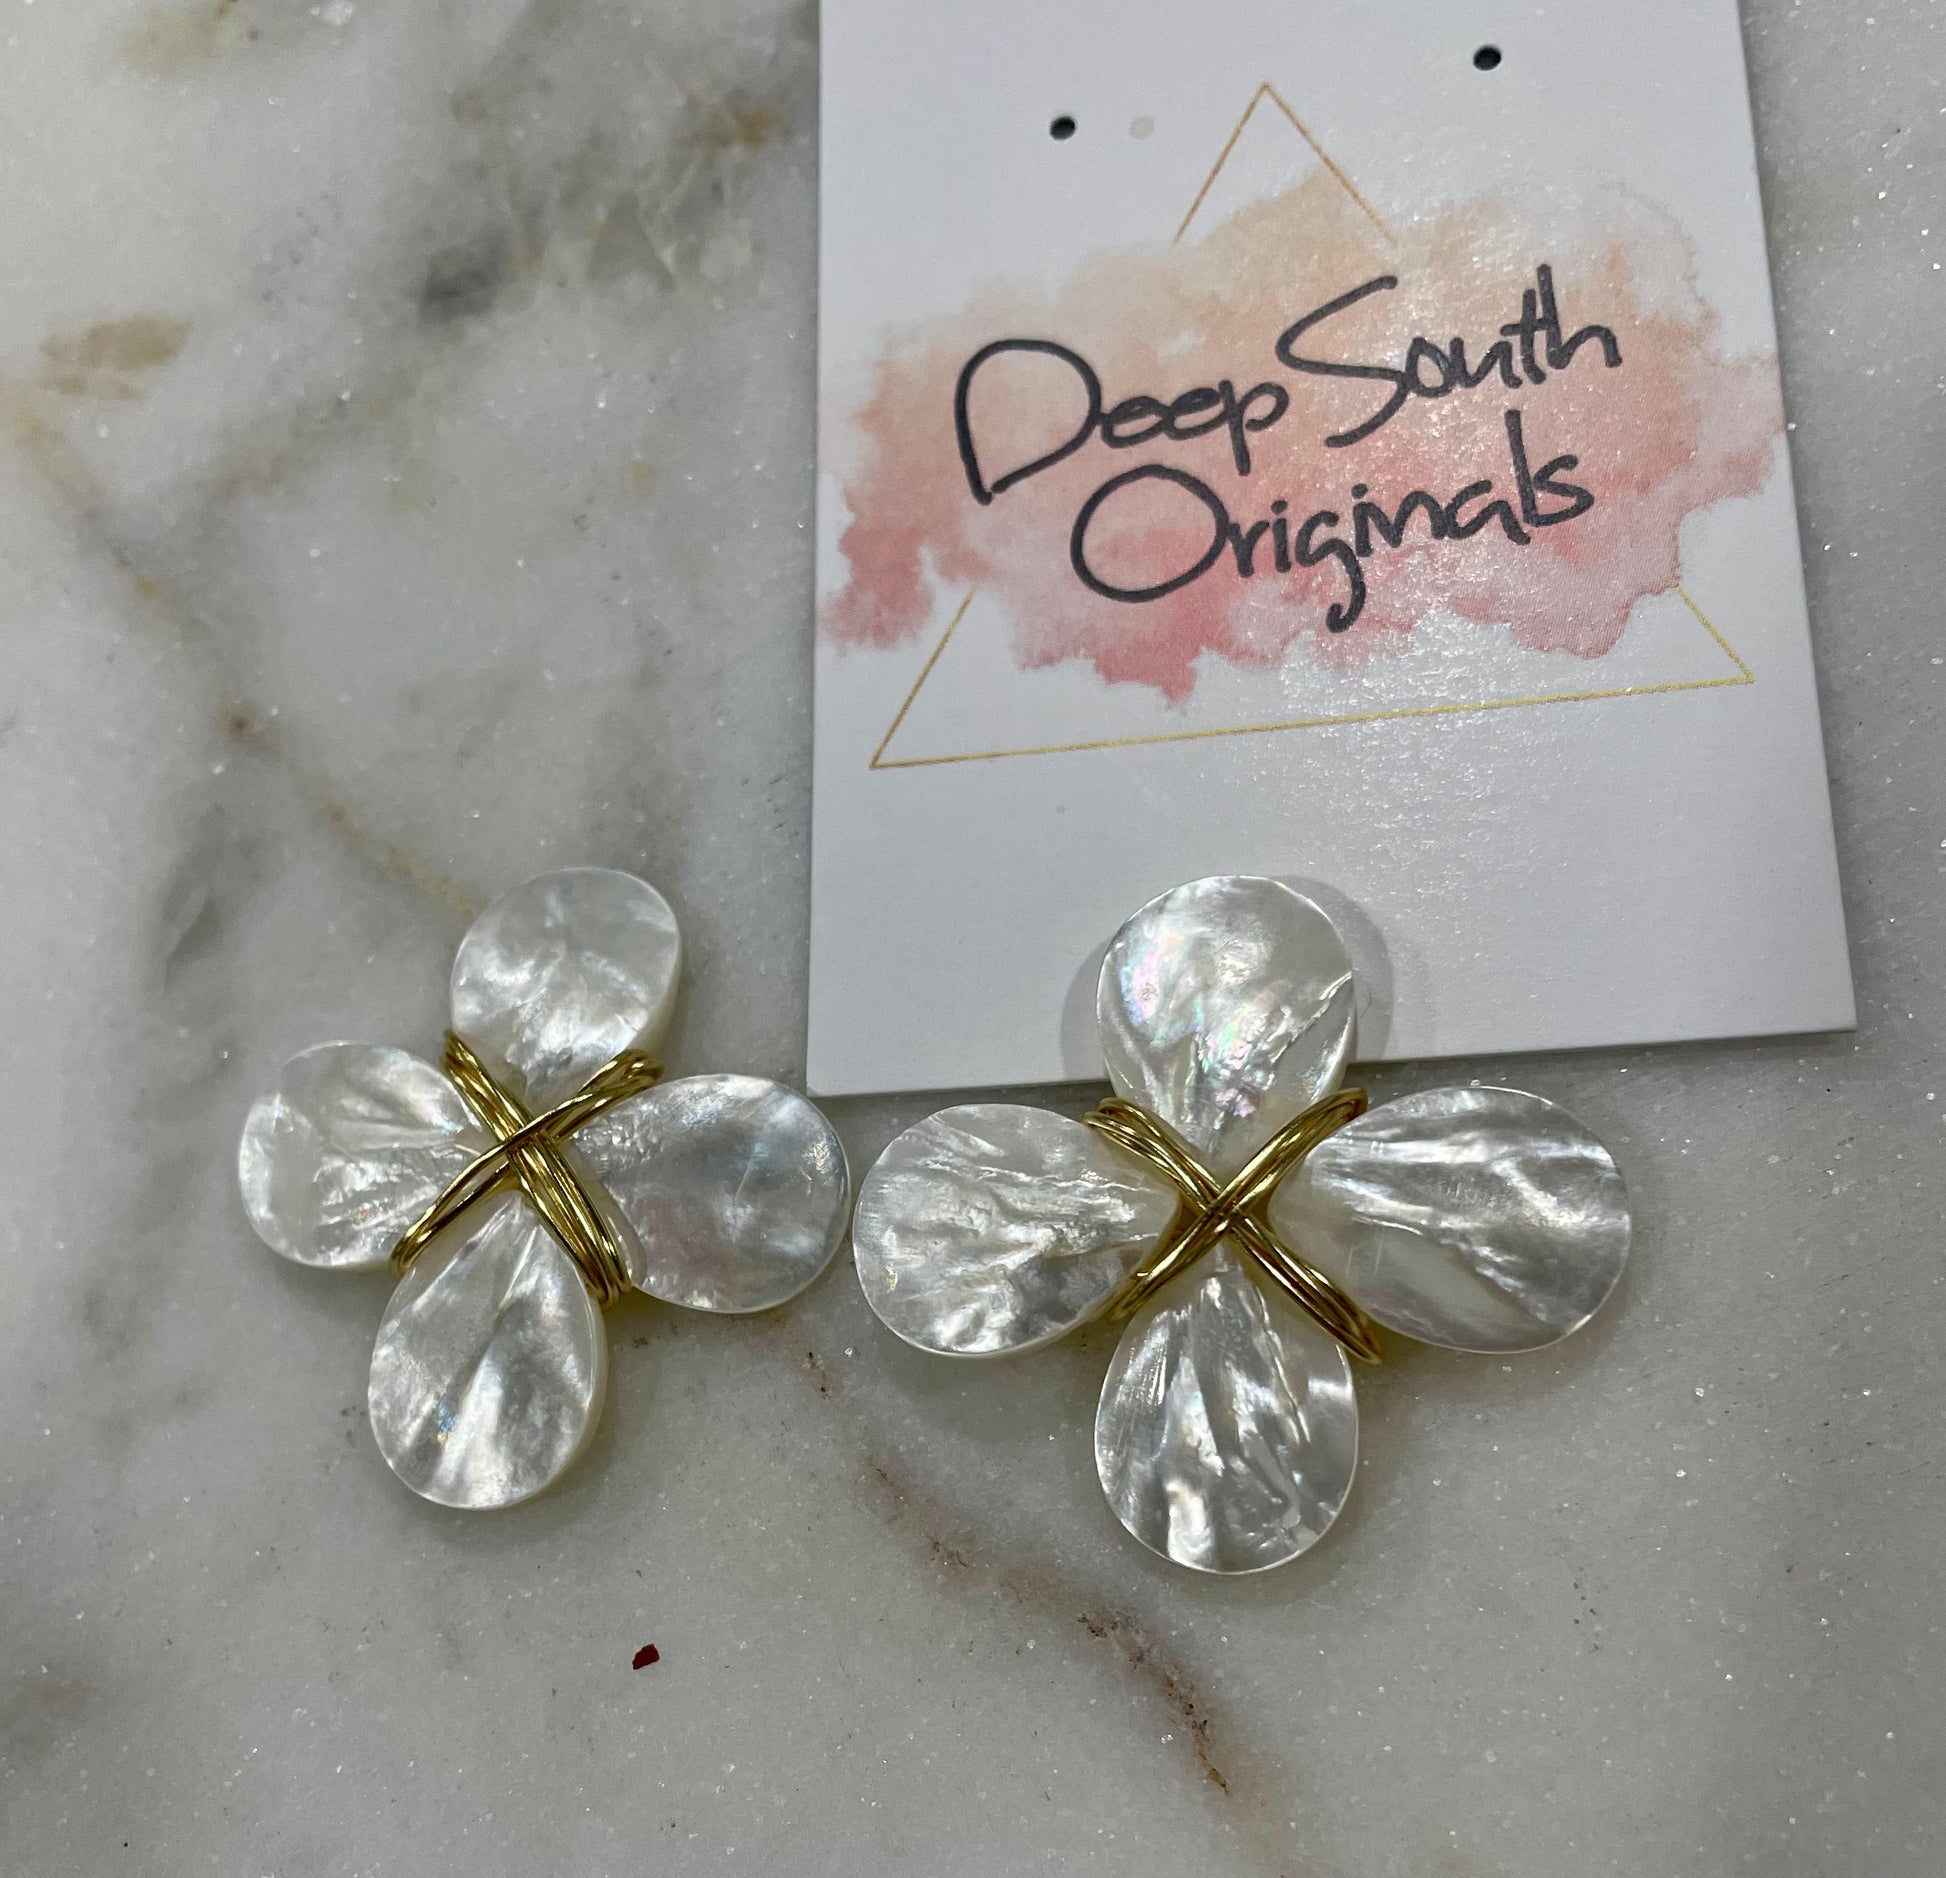 Handmade Mother of Pearl Earrings - Deep South Originals